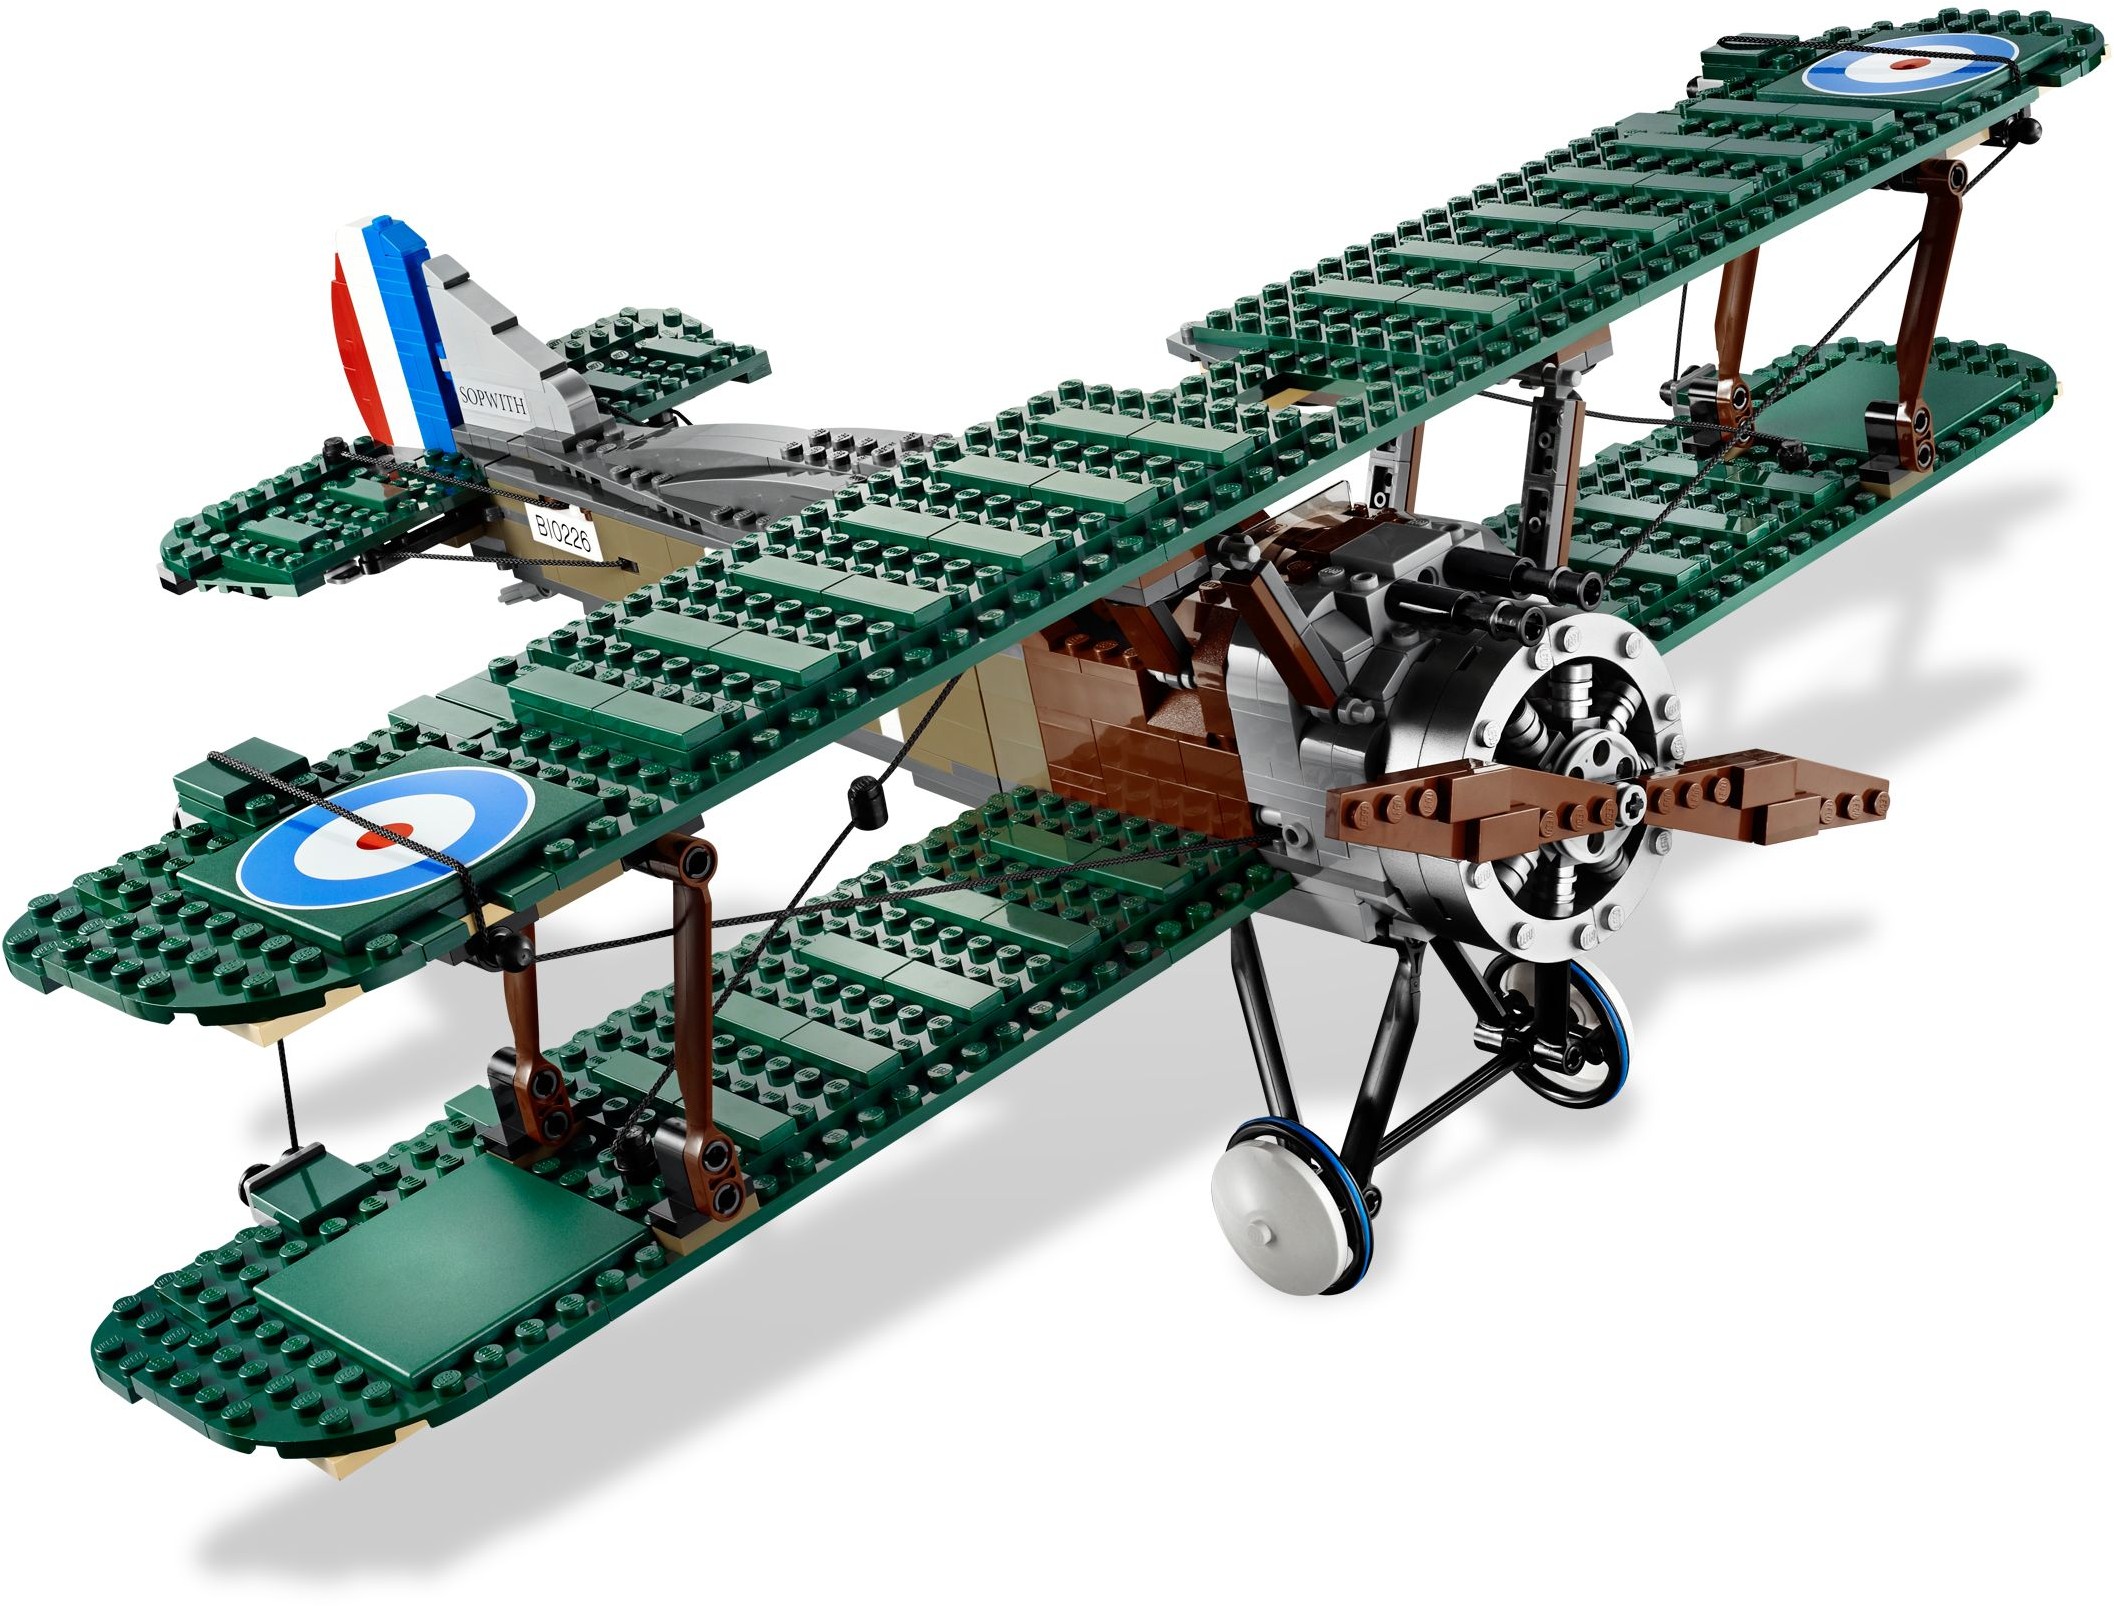 lego creator airplane